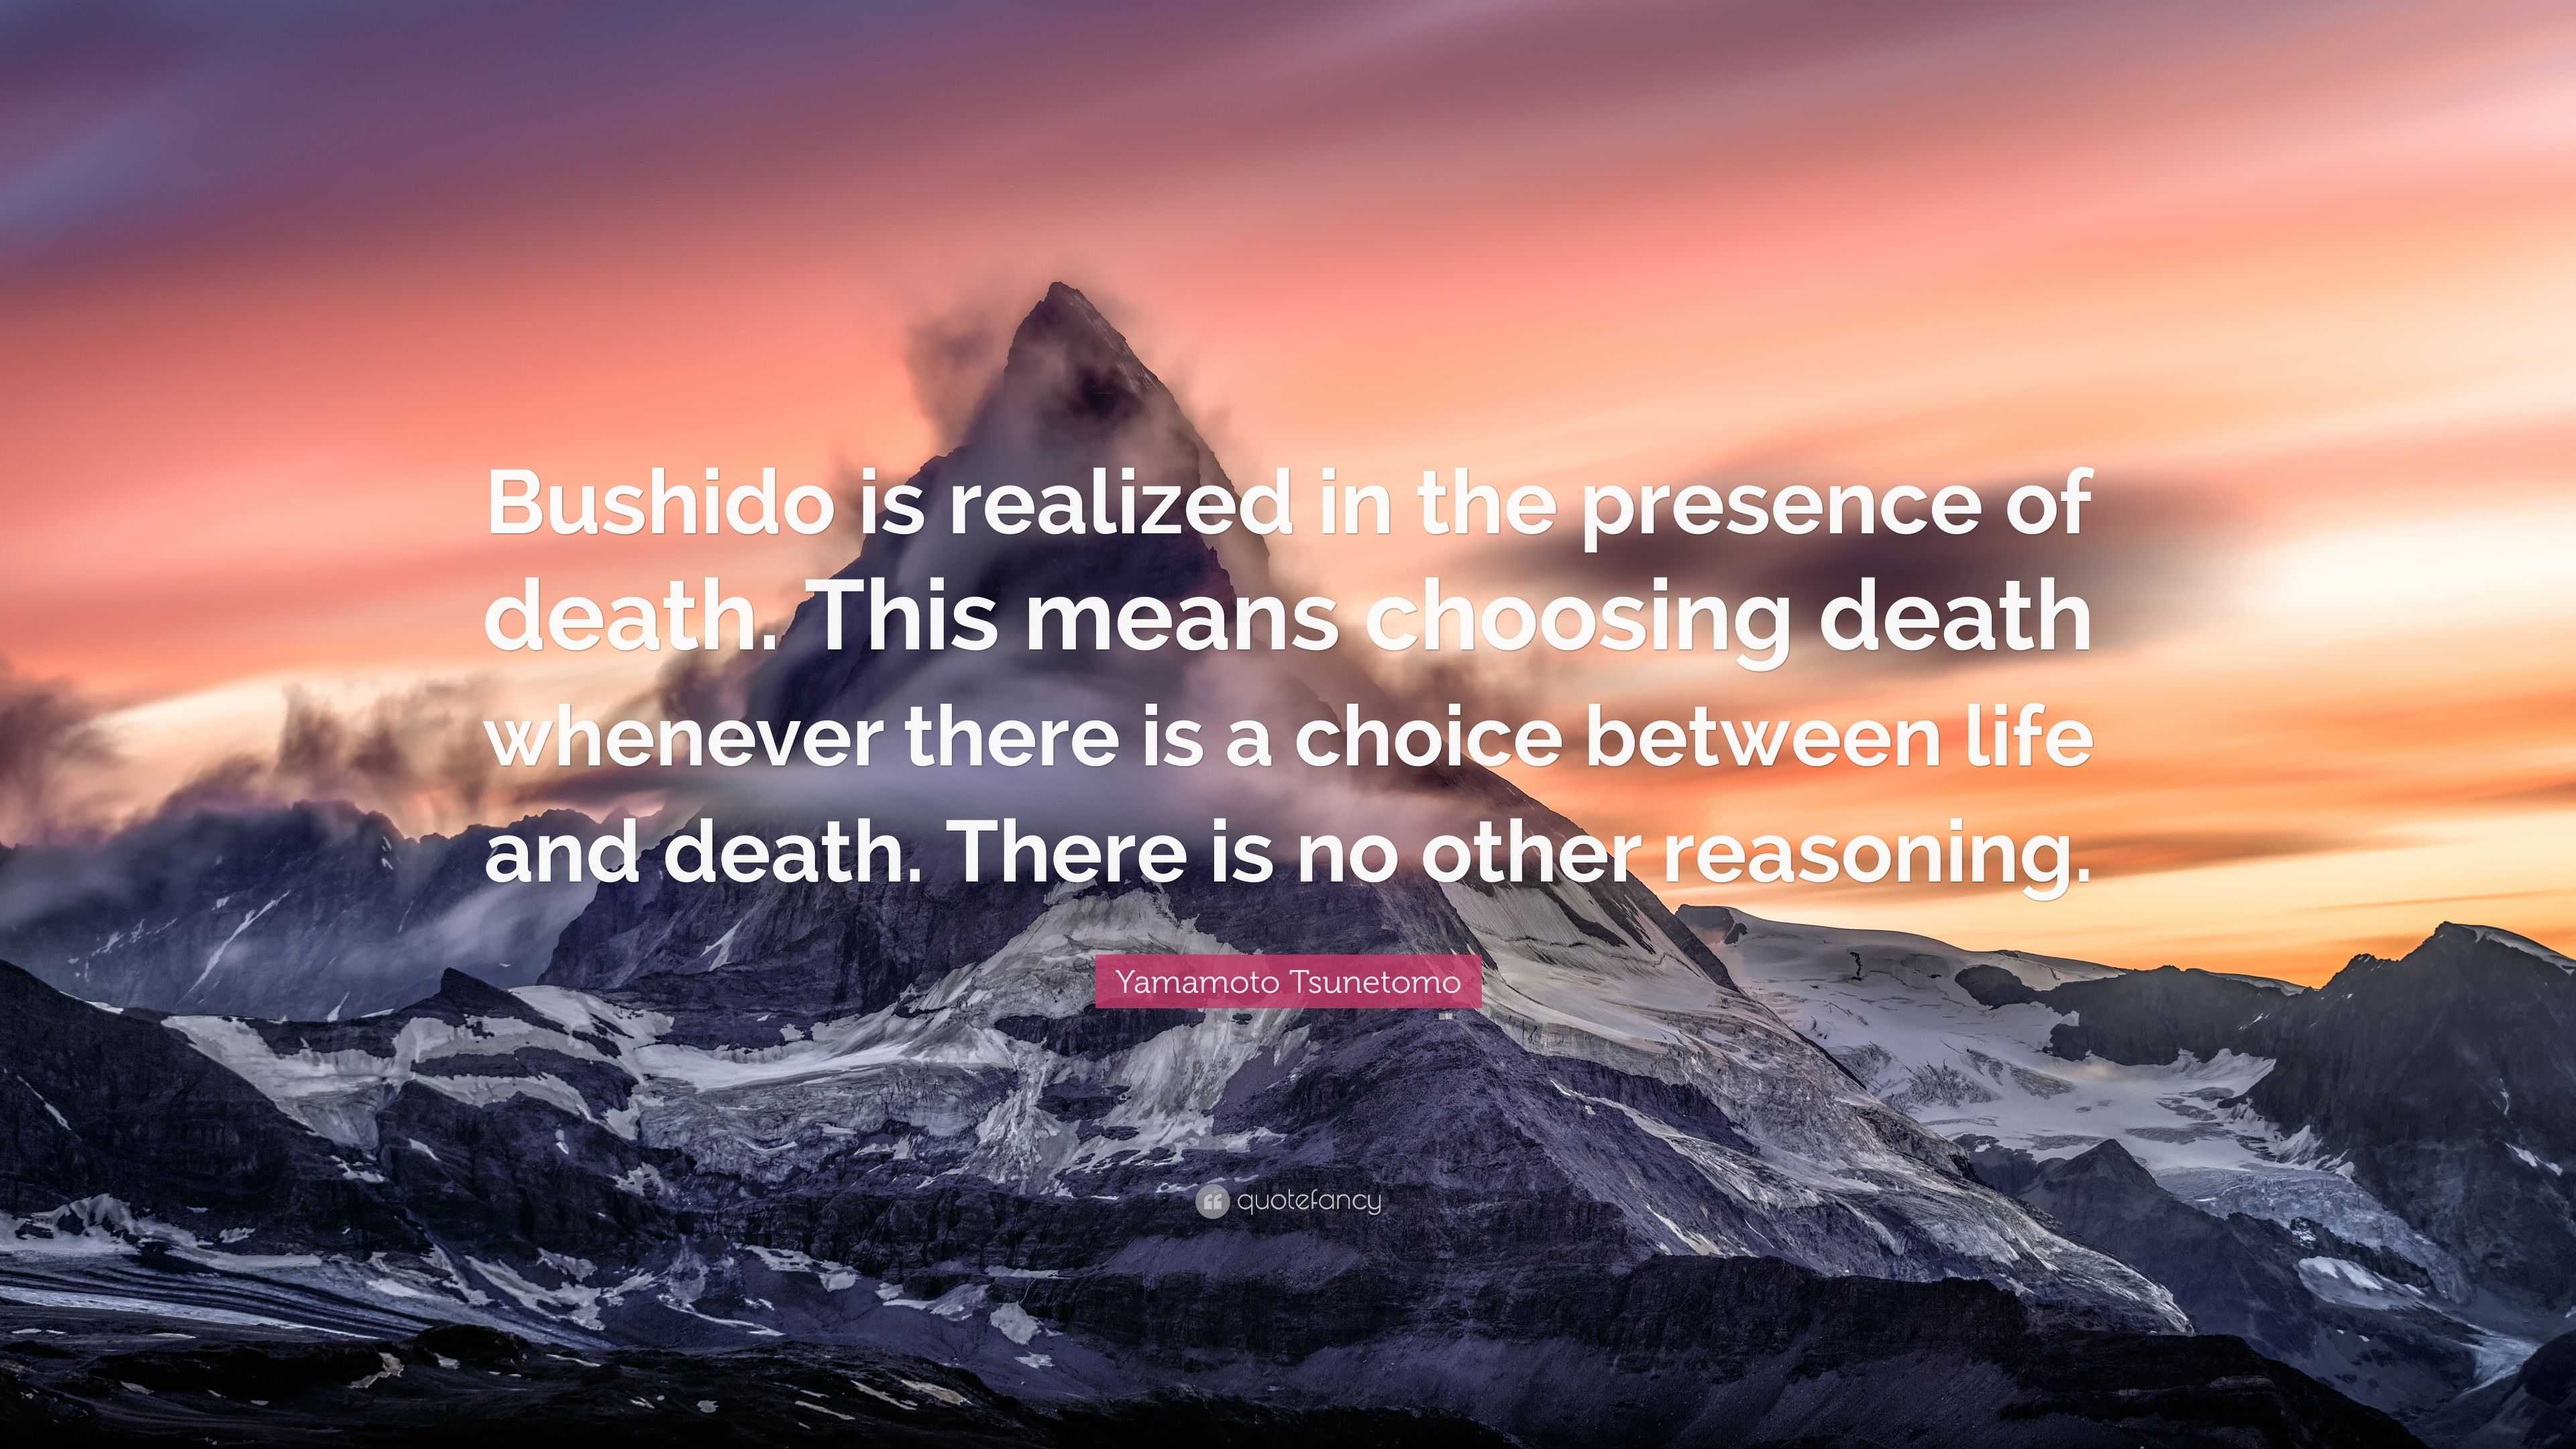 Yamamoto Tsunetomo Quote: “Bushido is realized in the presence of death ...